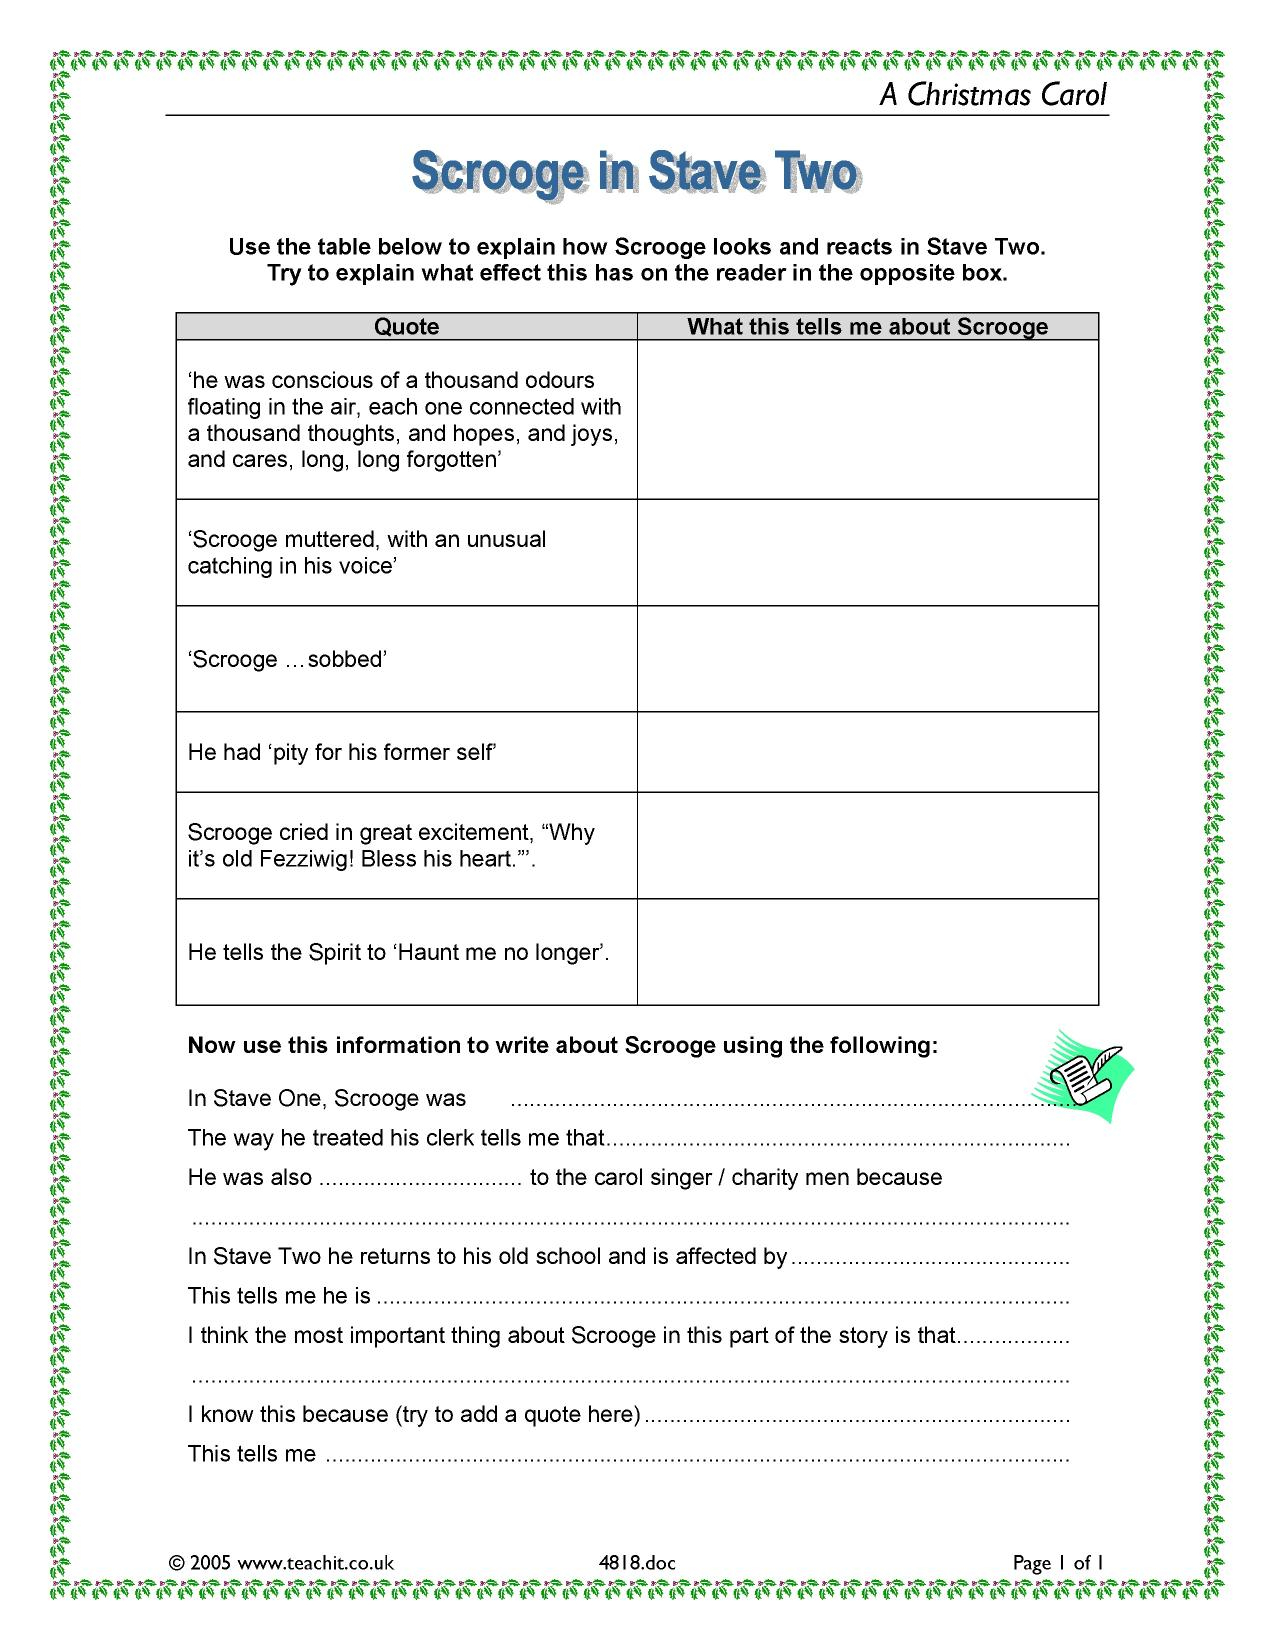 A Christmas Carol Worksheet | Printable Worksheets And